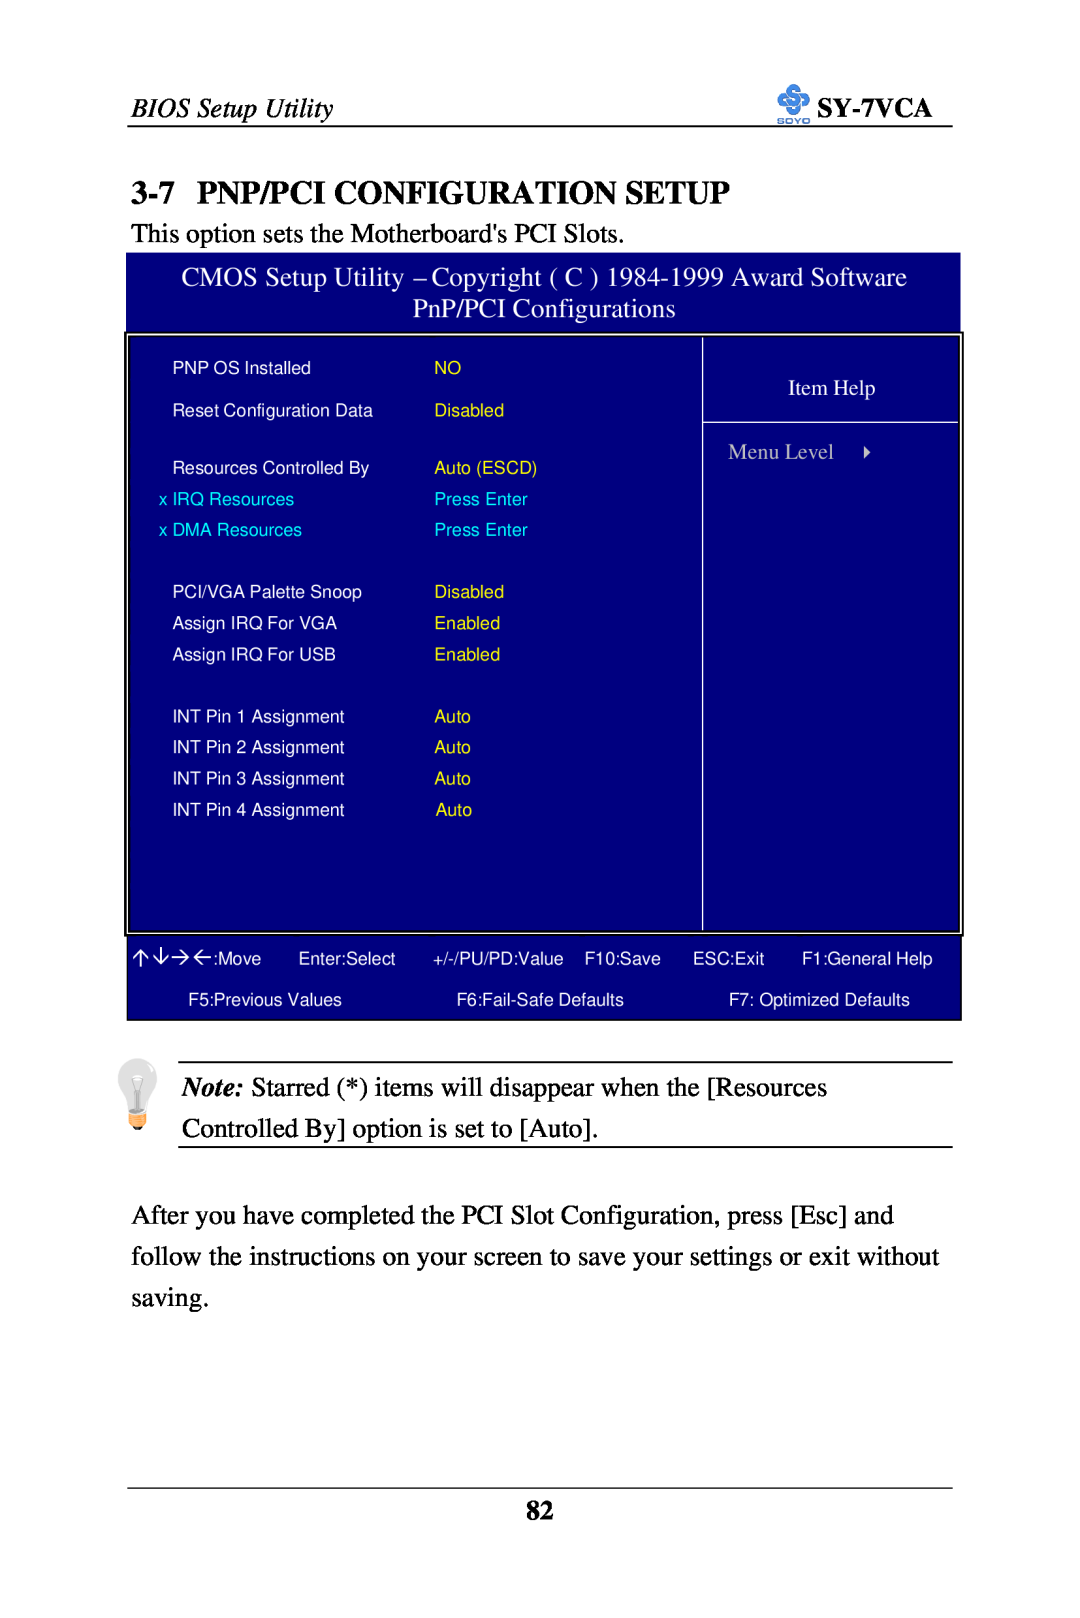 SOYO SY-7VCA user manual 3-7 PNP/PCI CONFIGURATION SETUP, PnP/PCI Configurations 